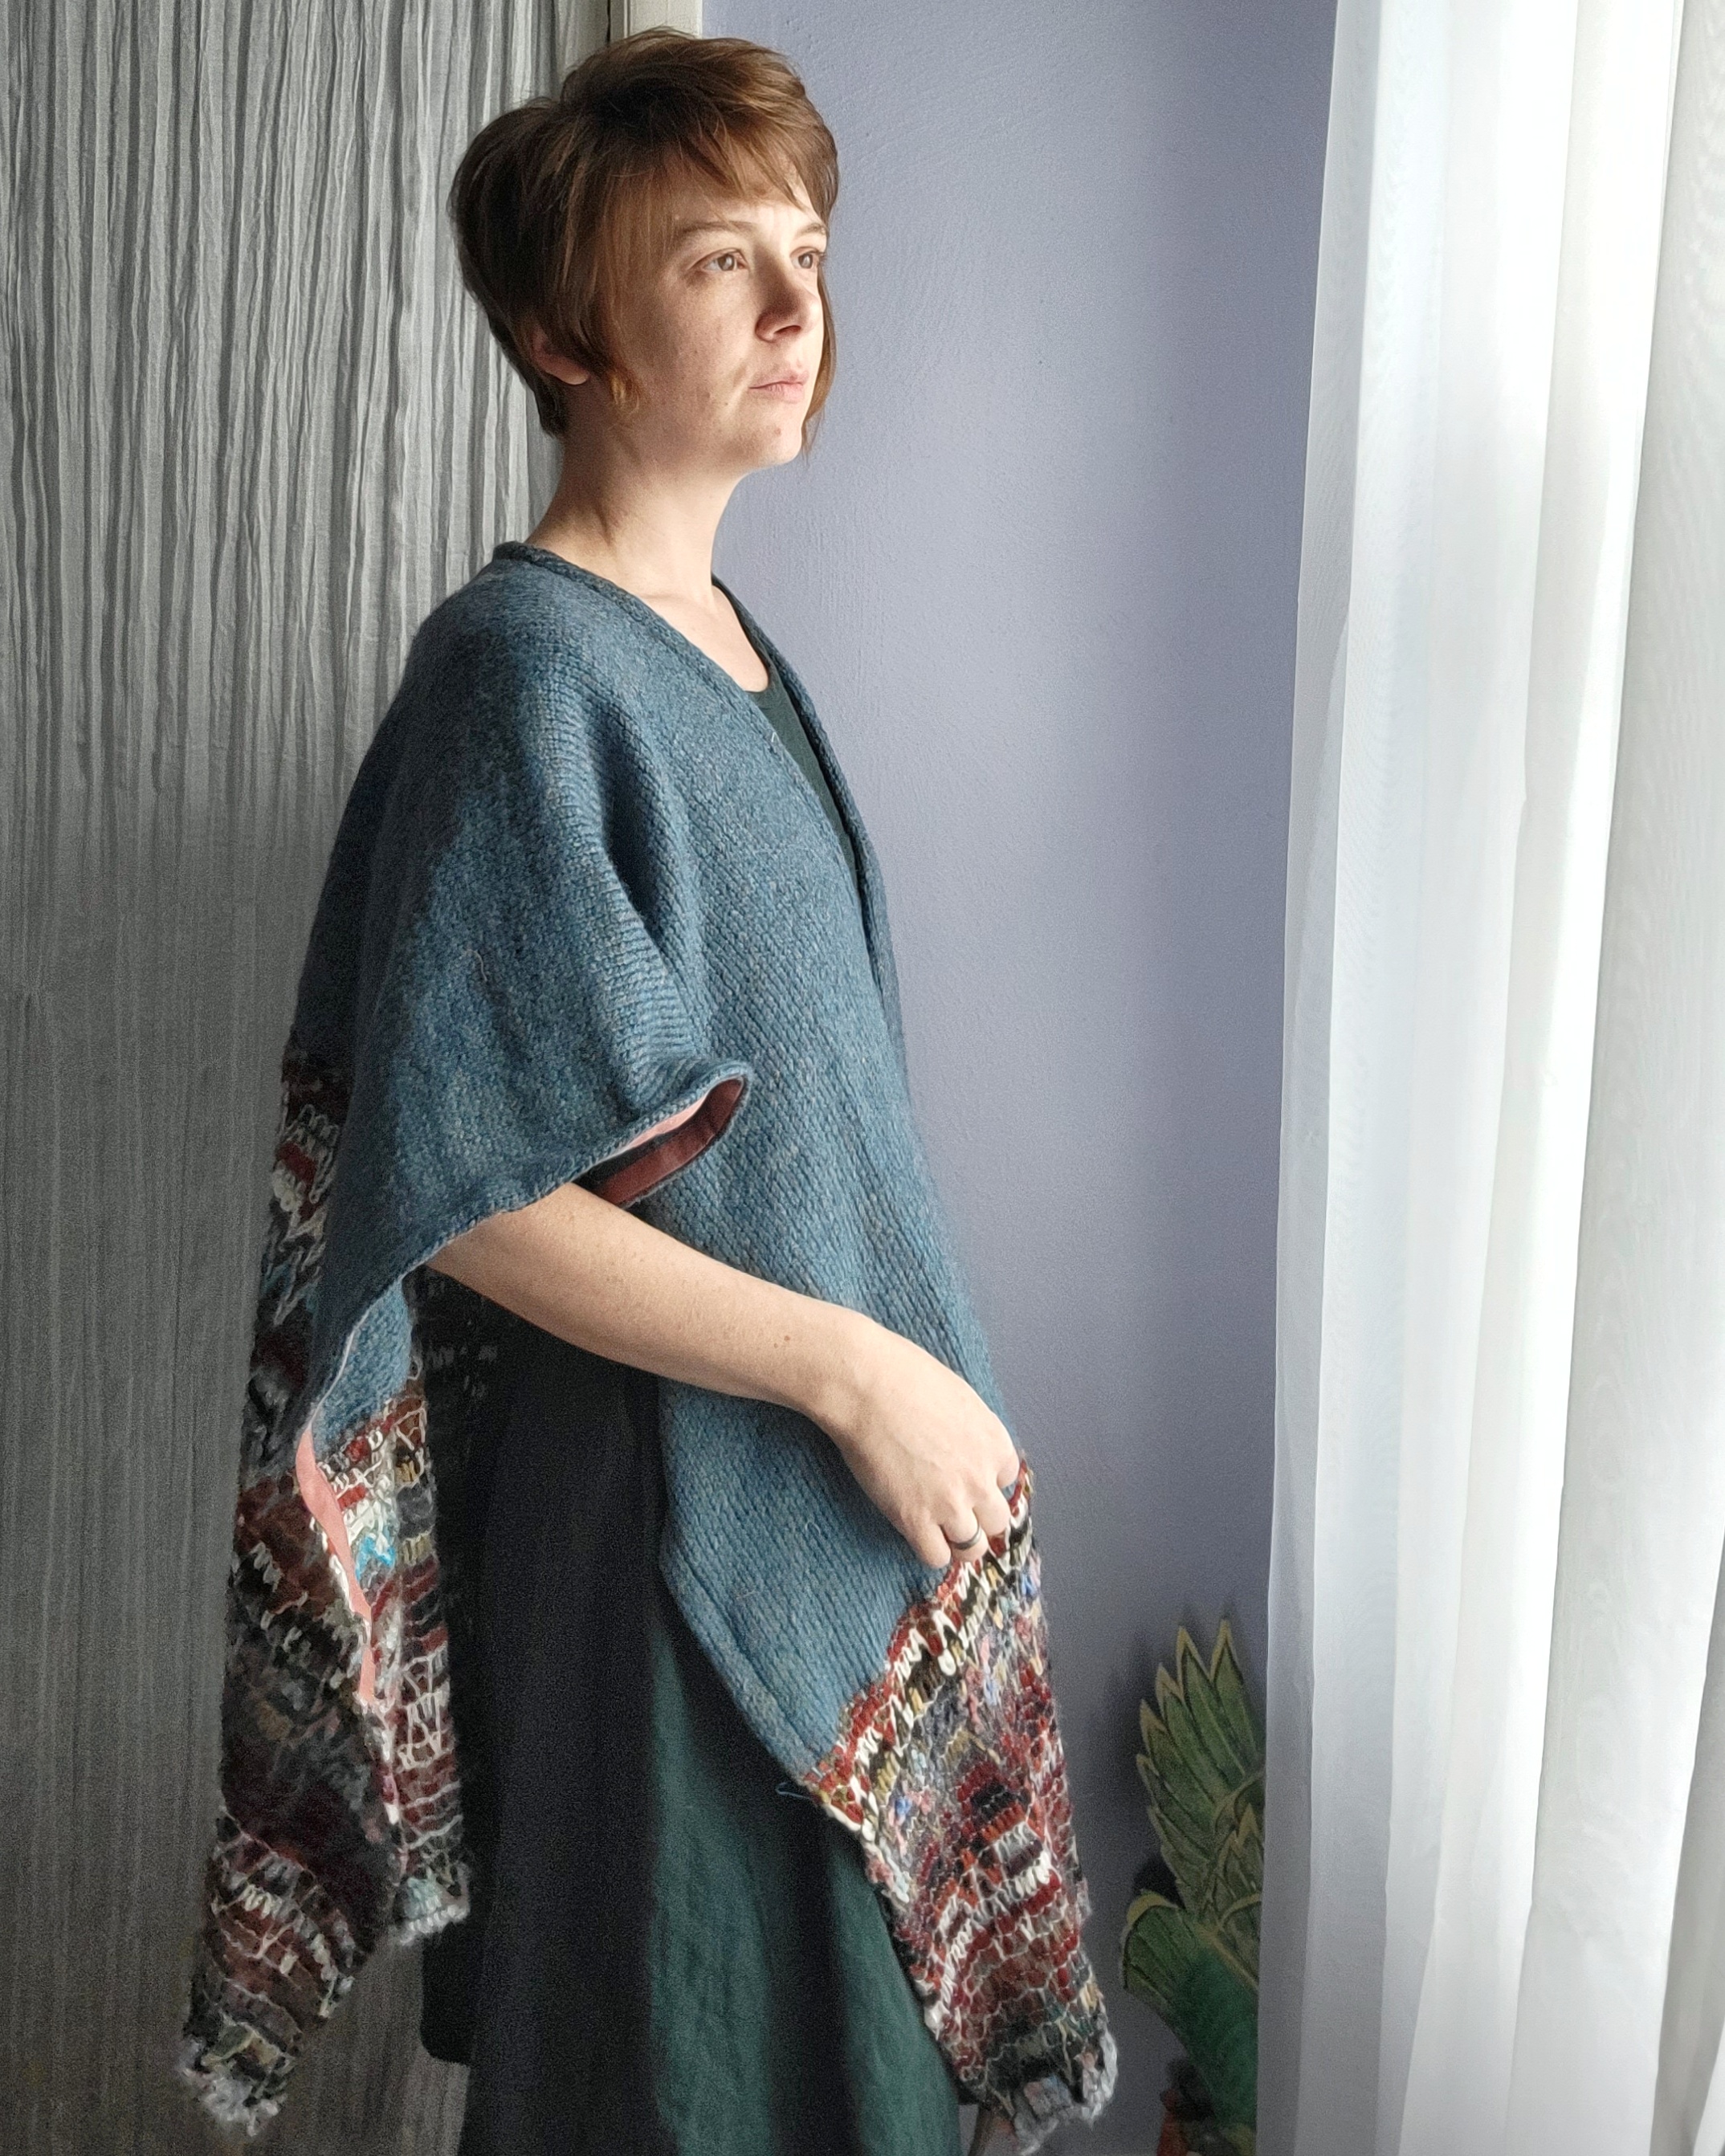 handmade shawl